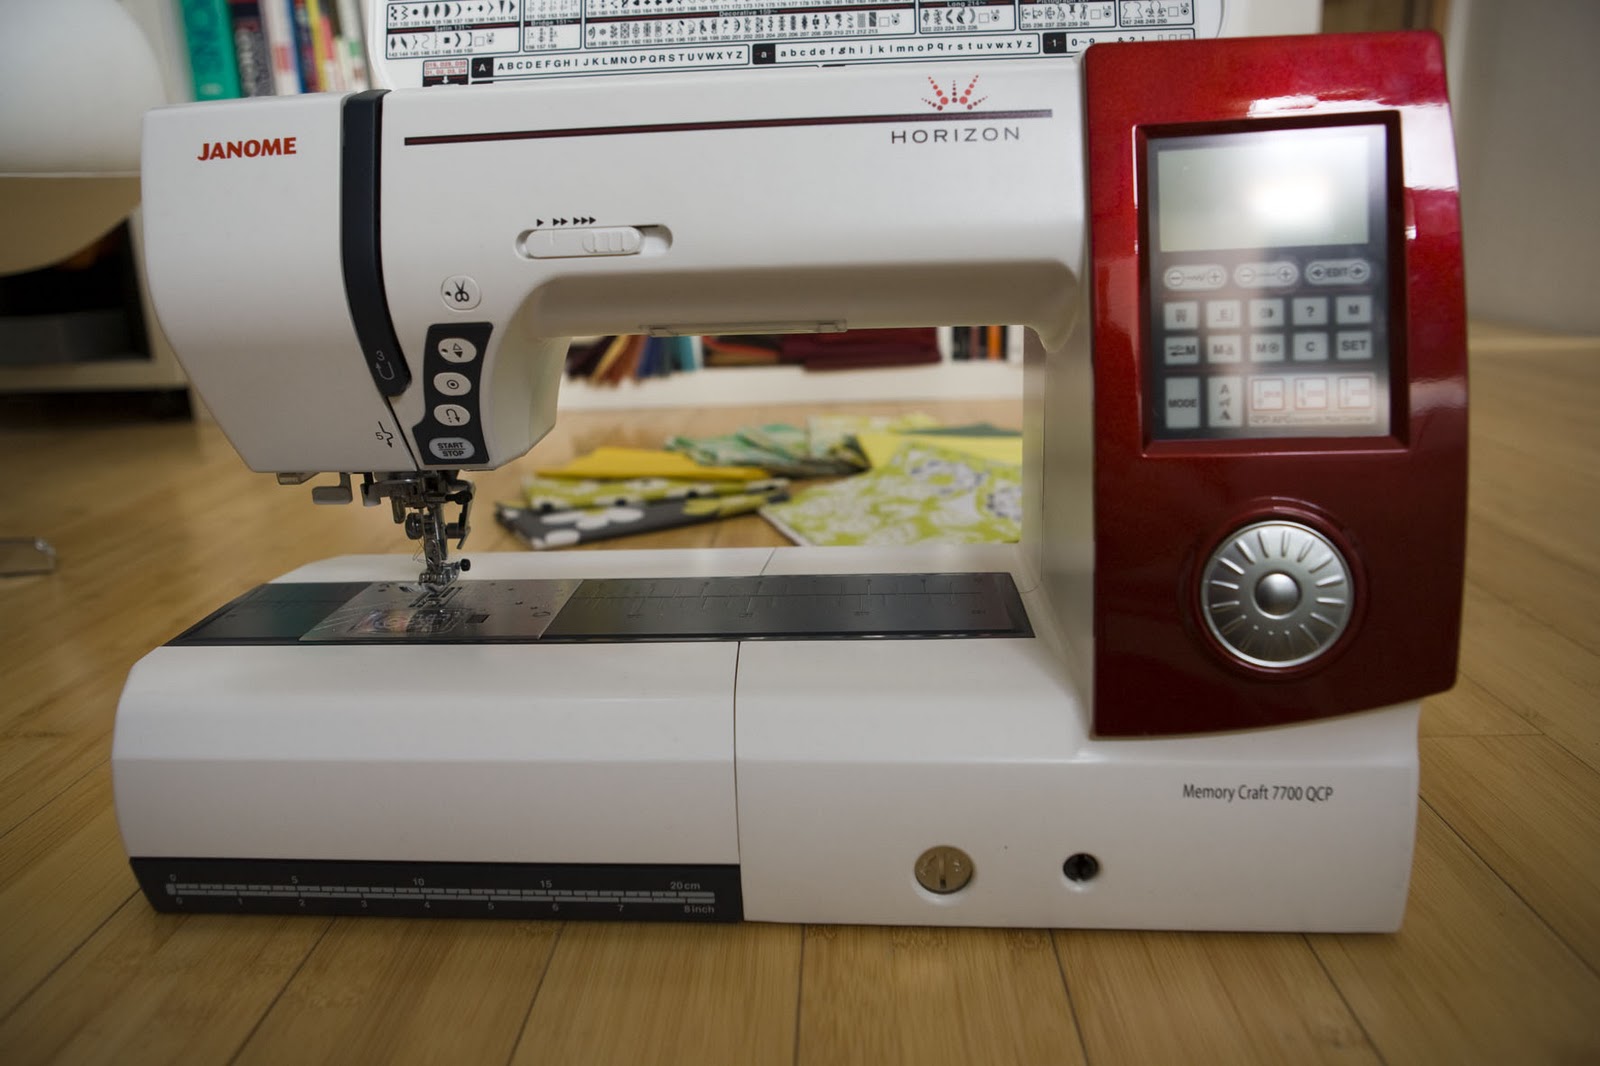 needles and lemons: Janome Horizon Memory Craft 7700 sewing